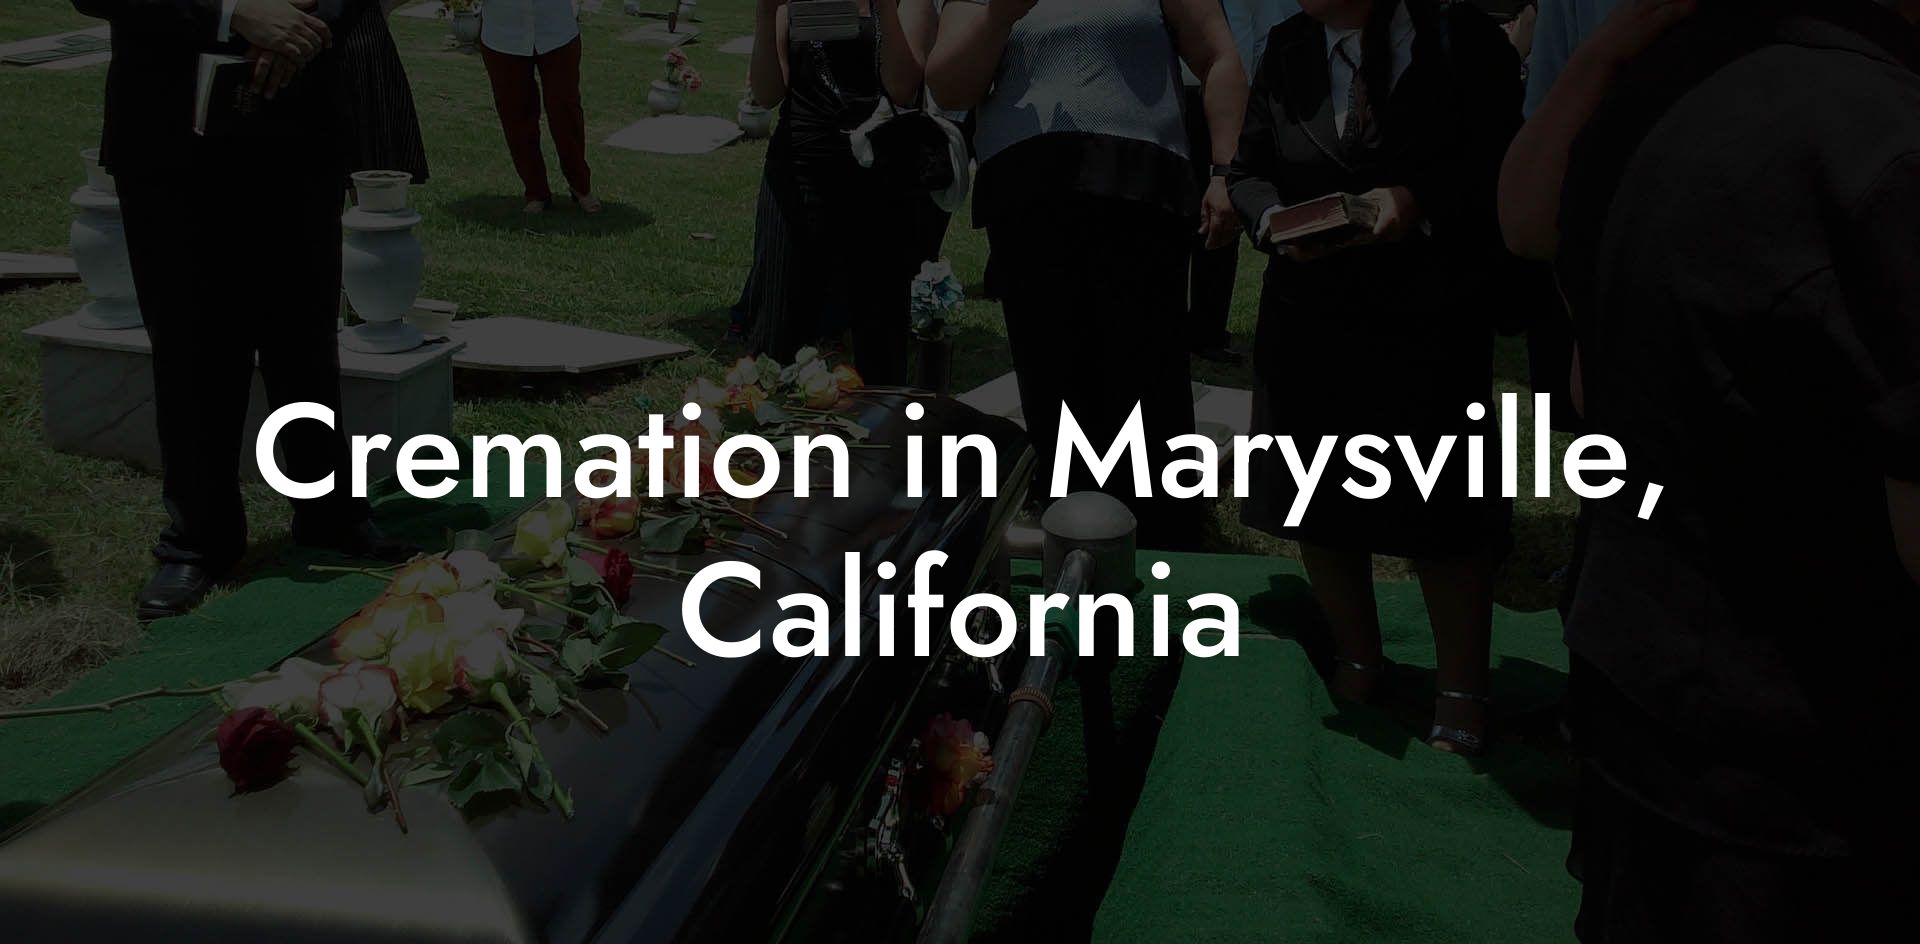 Cremation in Marysville, California